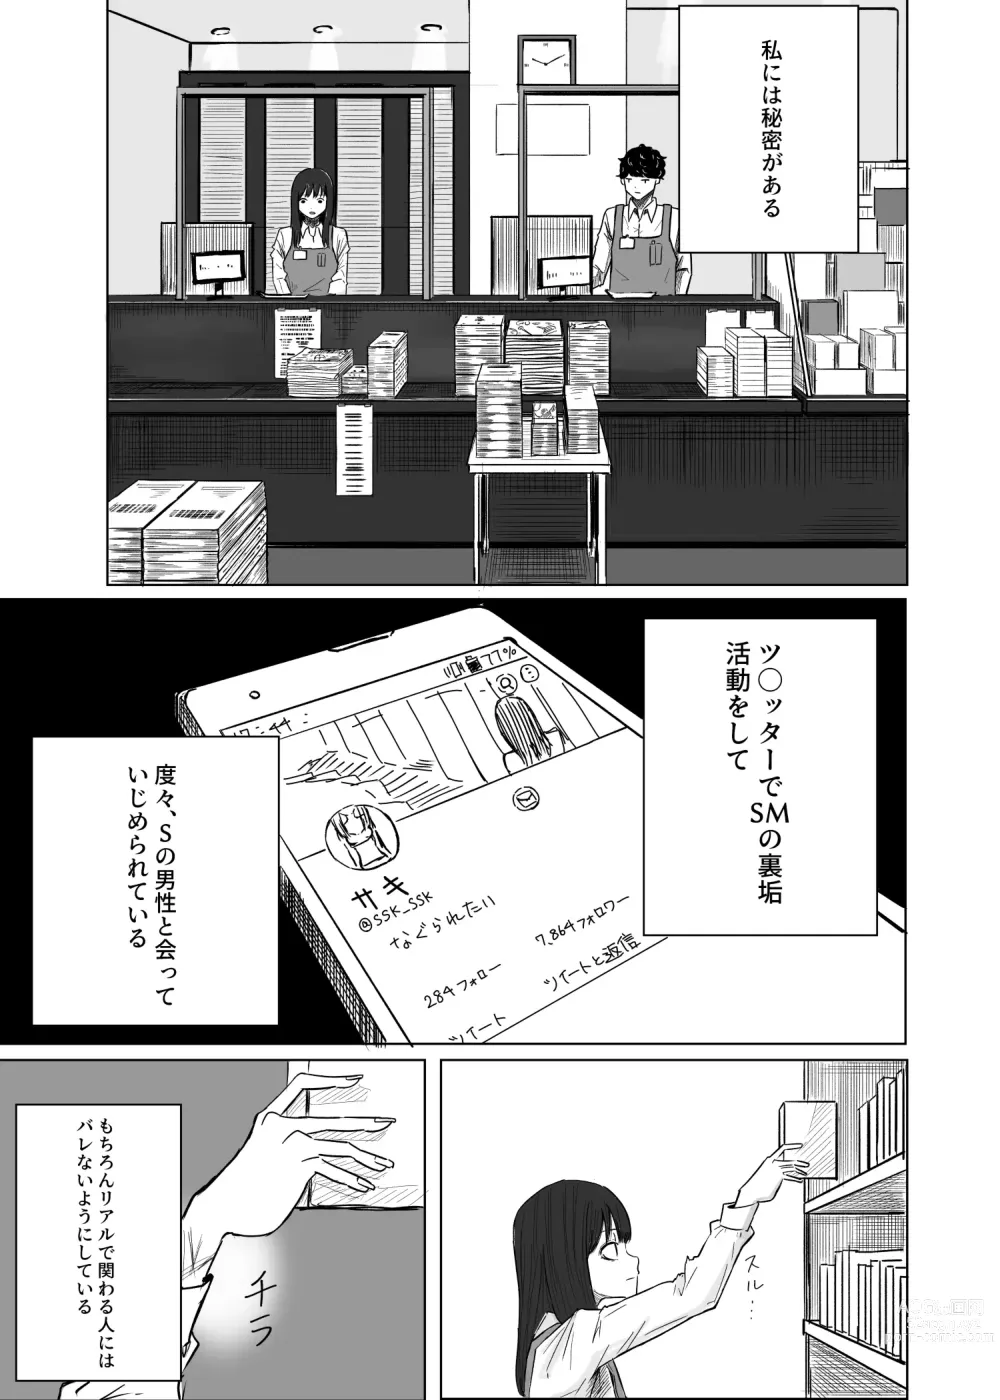 Page 5 of doujinshi M ni Naru